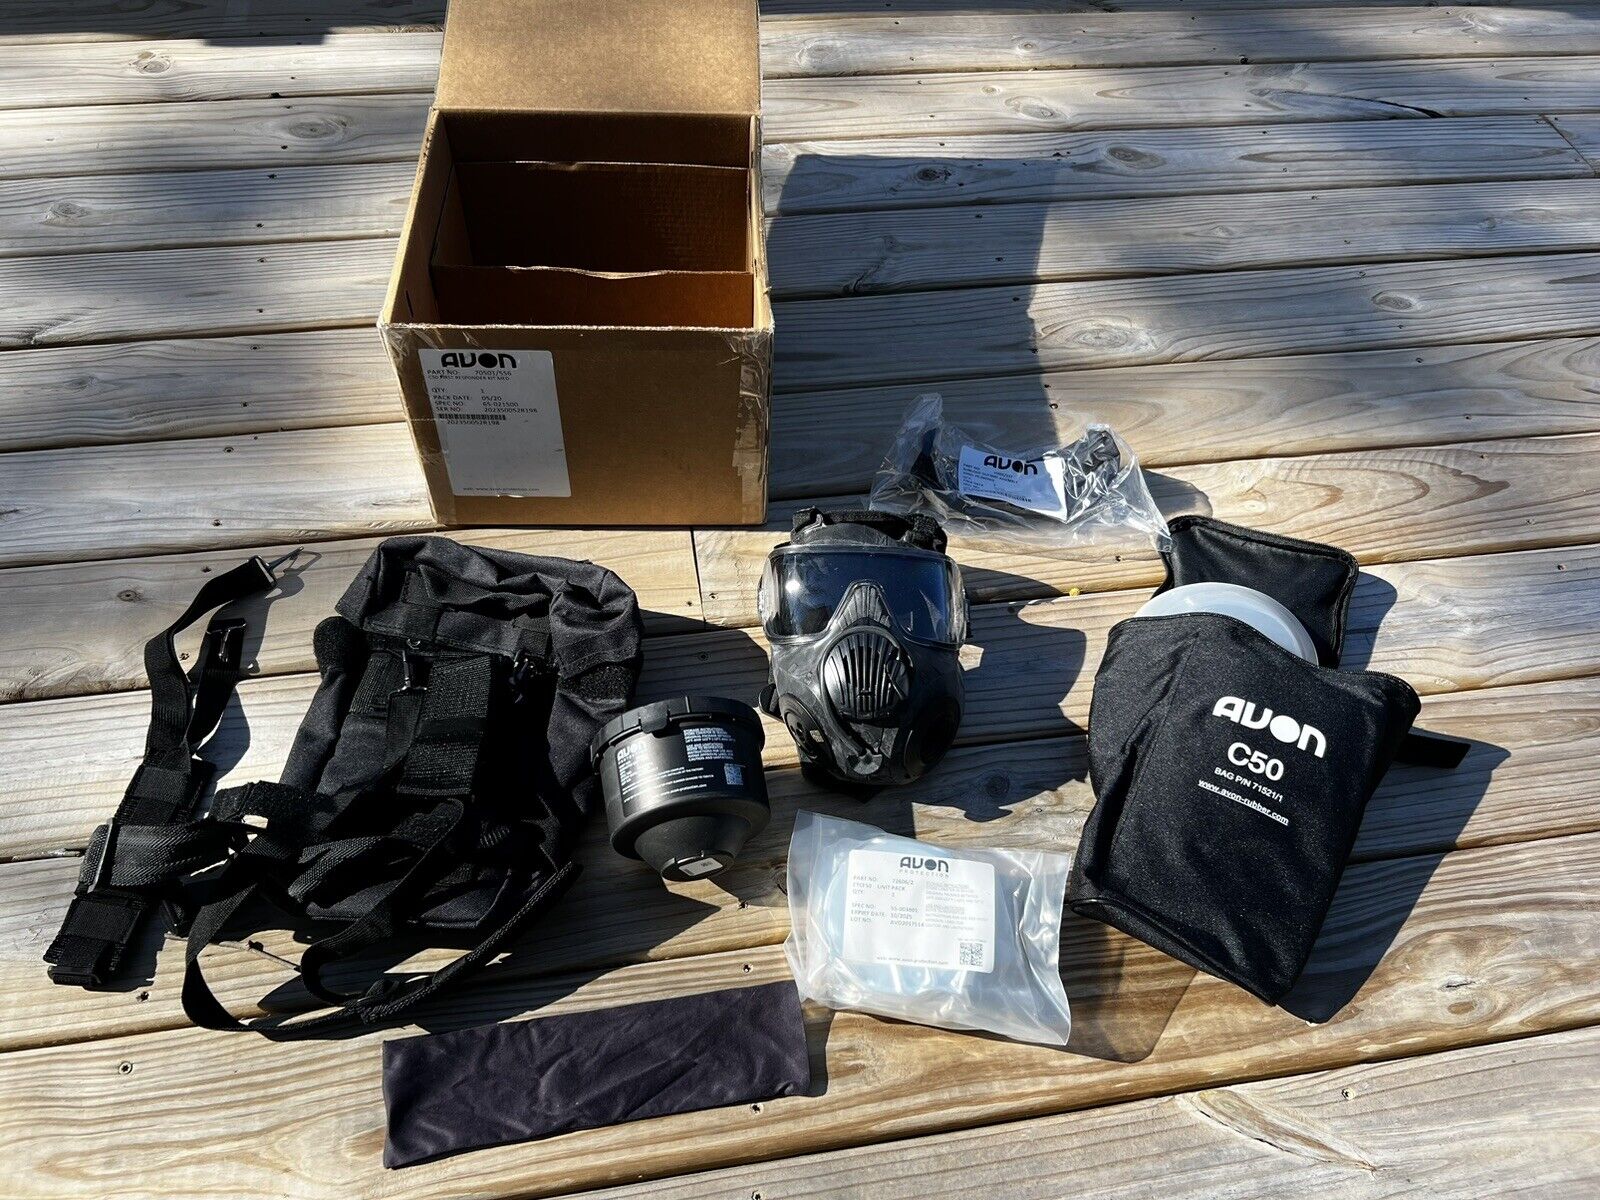 Avon 70501/556 C50 First Responder Gas Mask kit size Medium